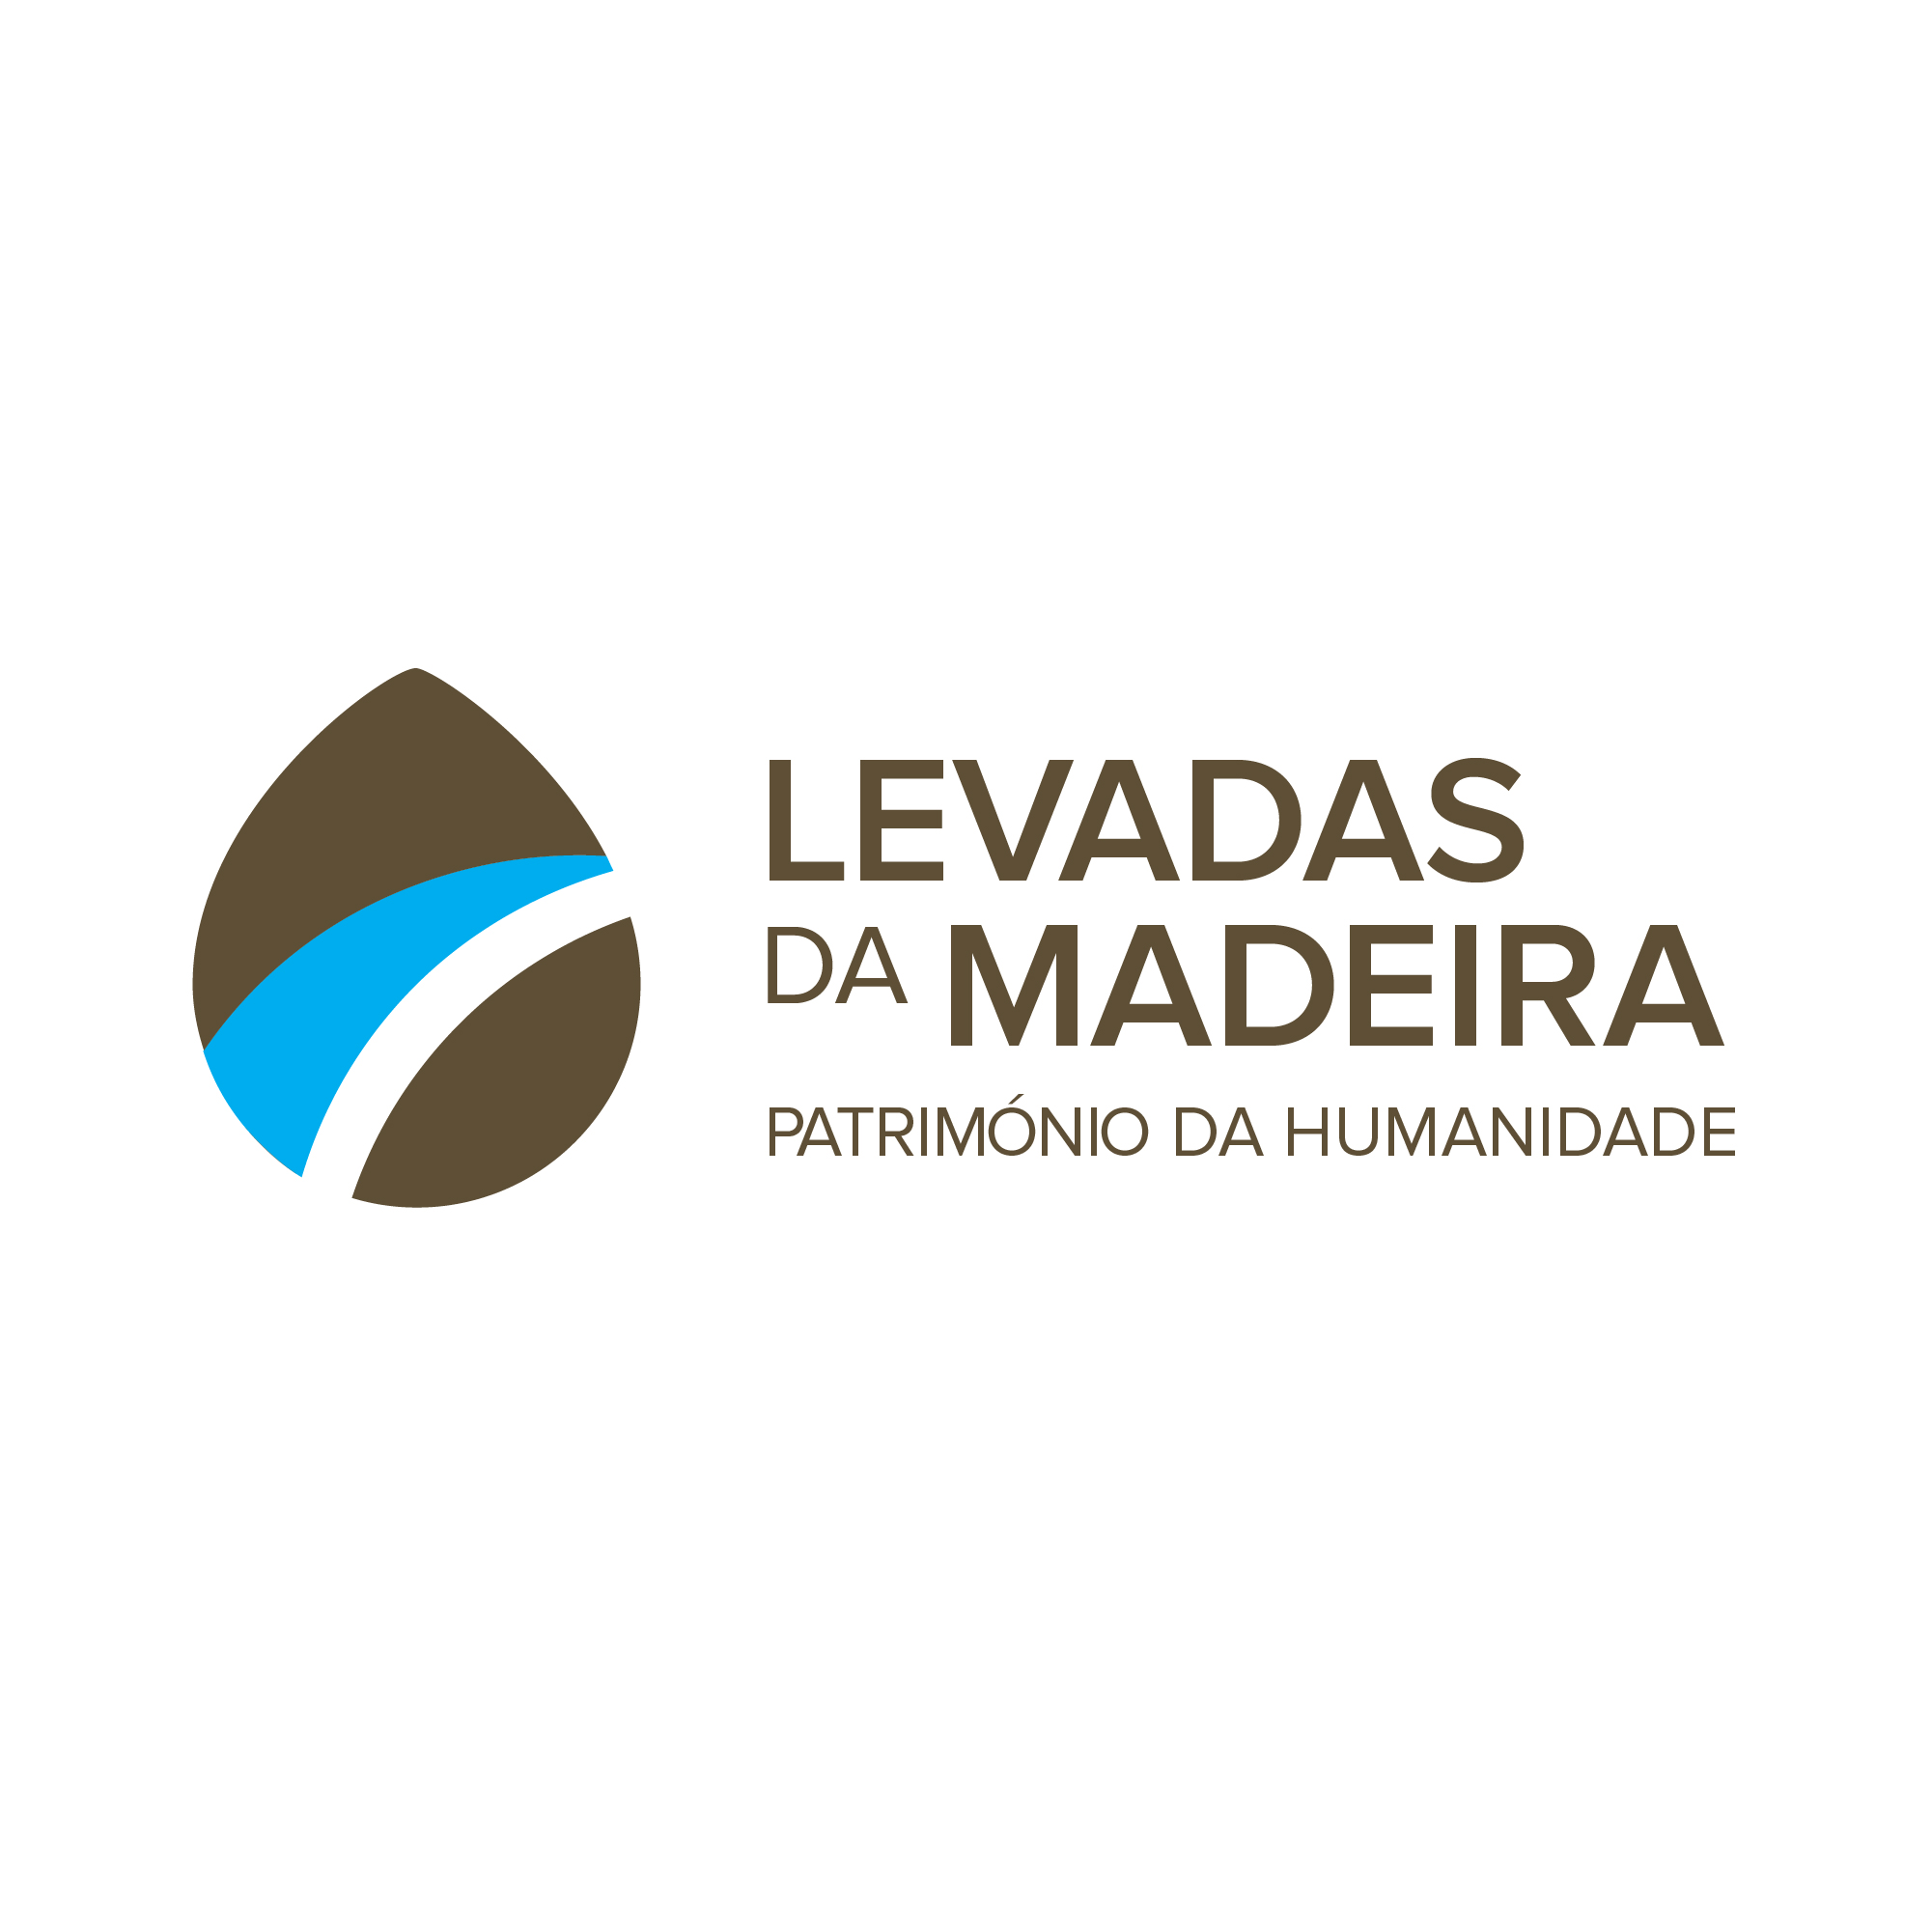 LEVADAS DA MADEIRA - lettering (2017)